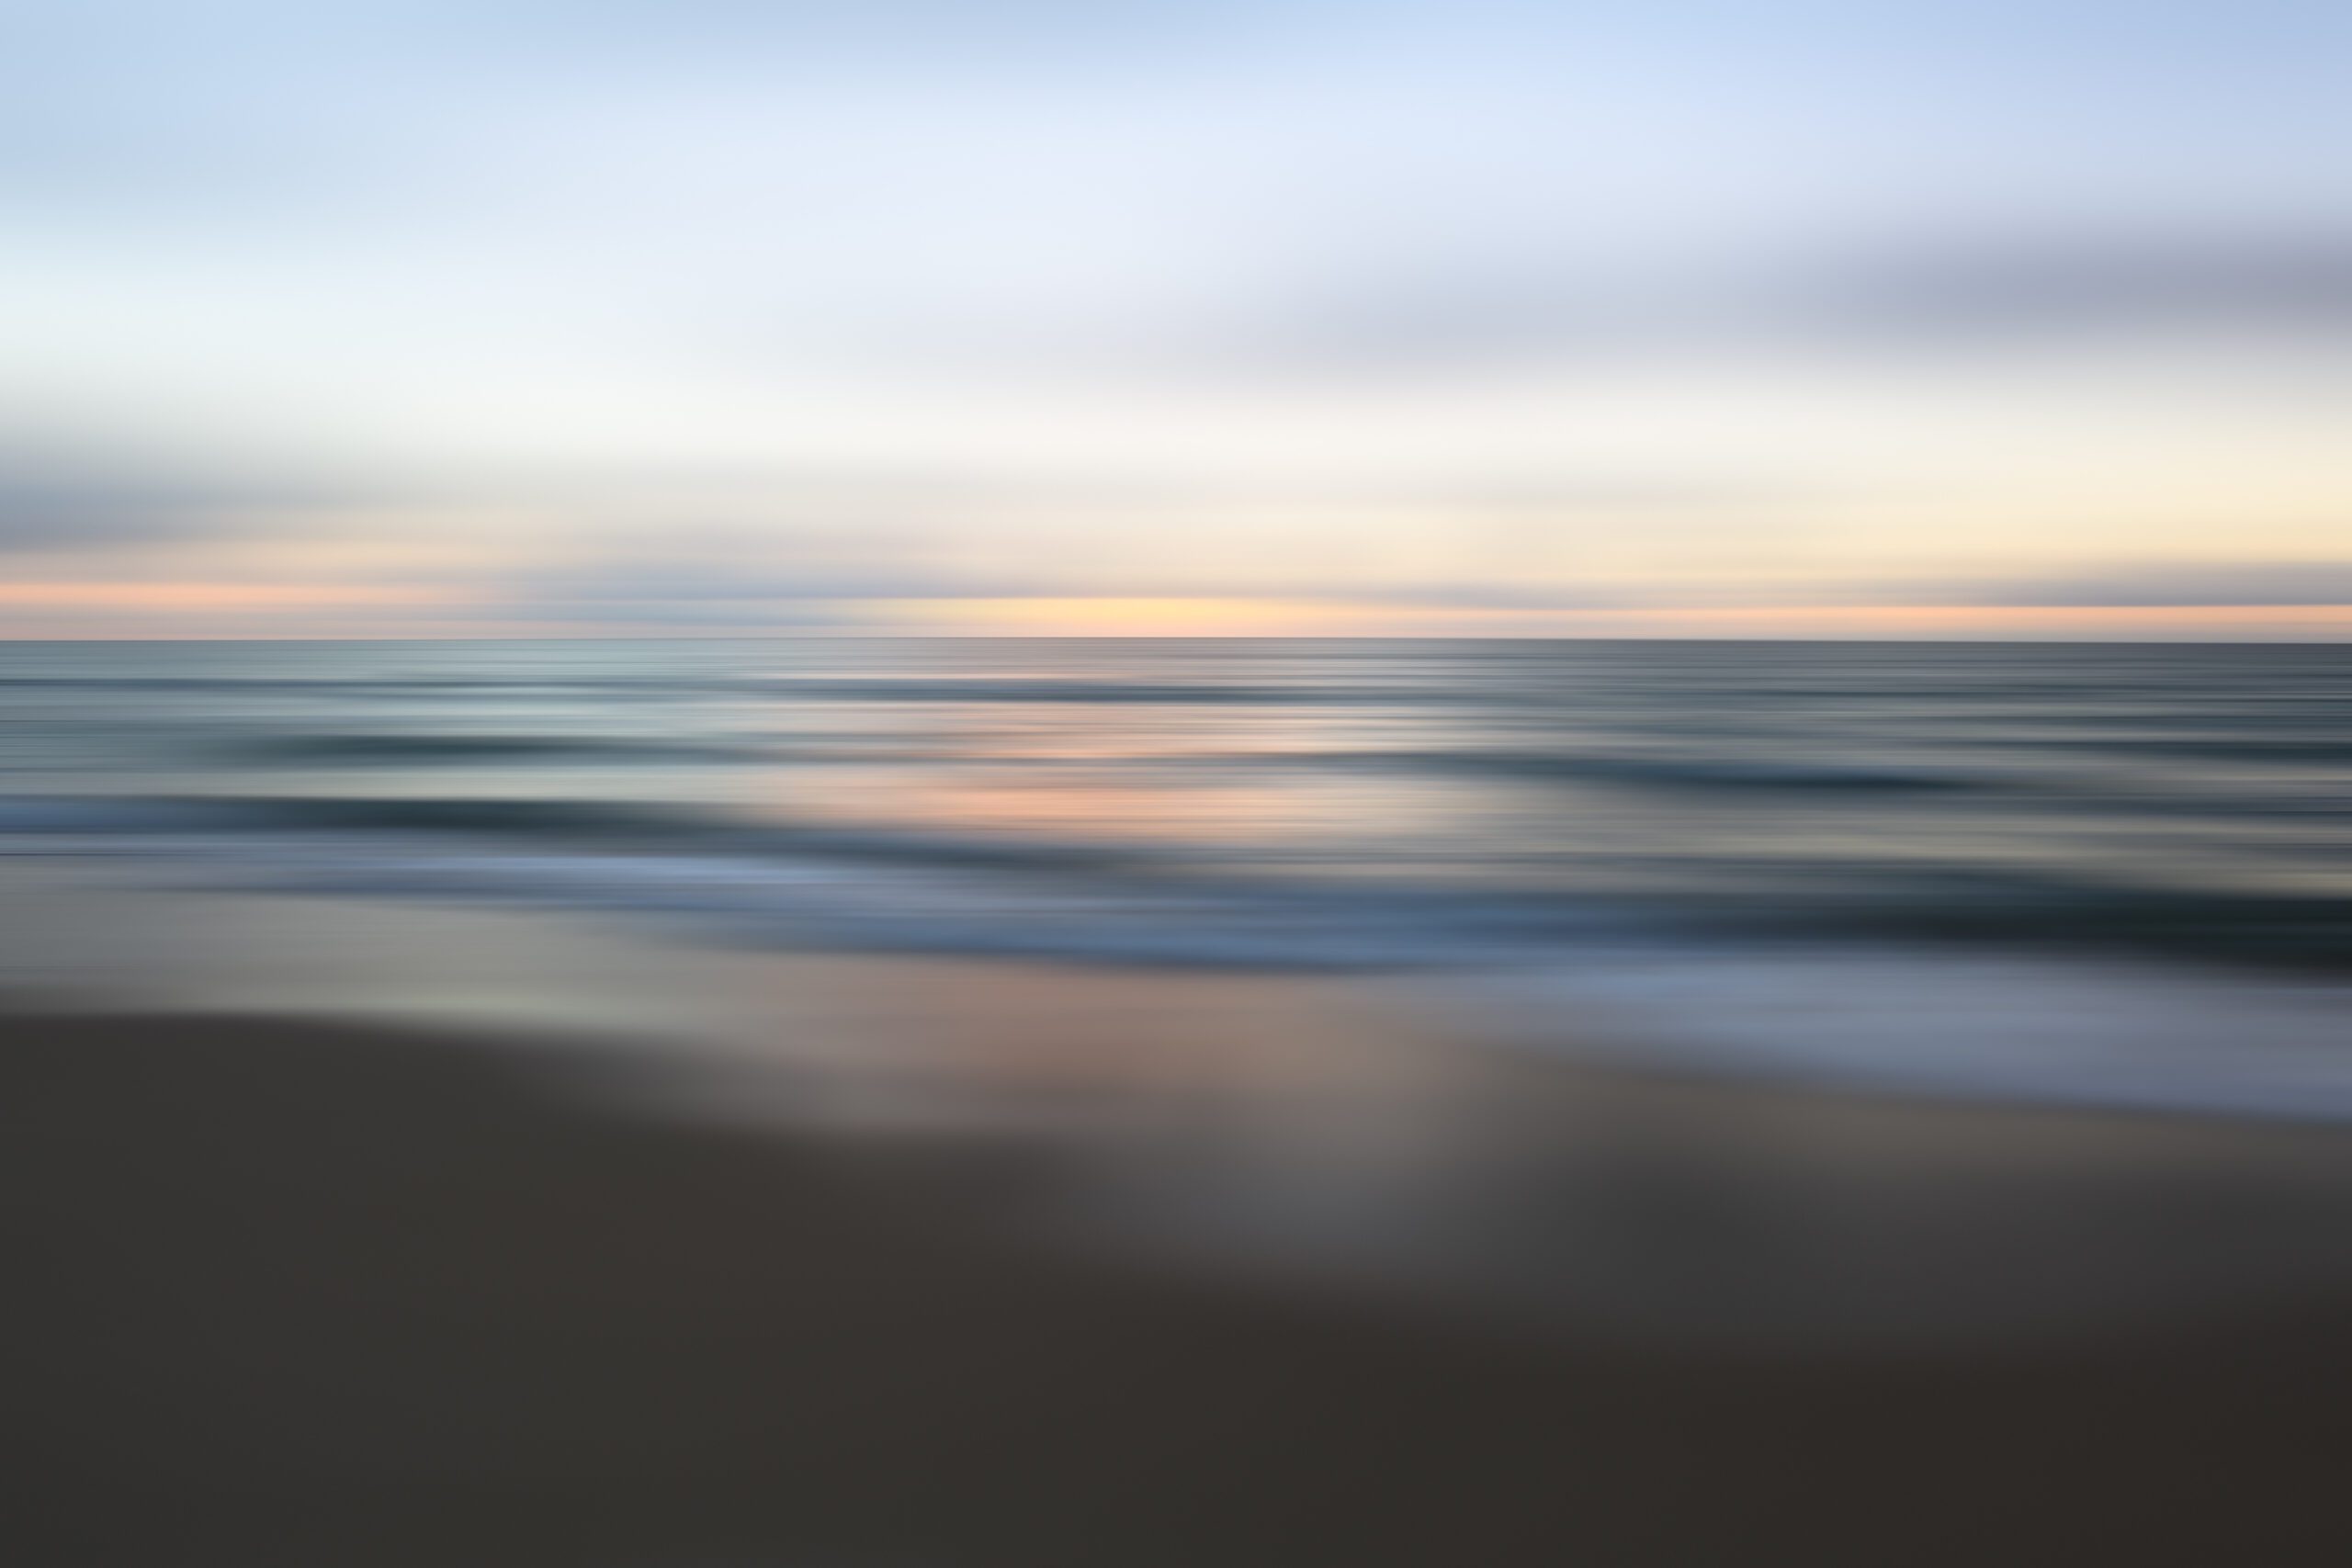 Atlantic Sunrise Art, Florida Seascape Photography, Morning Waves Print, Karl Hronek Artistry